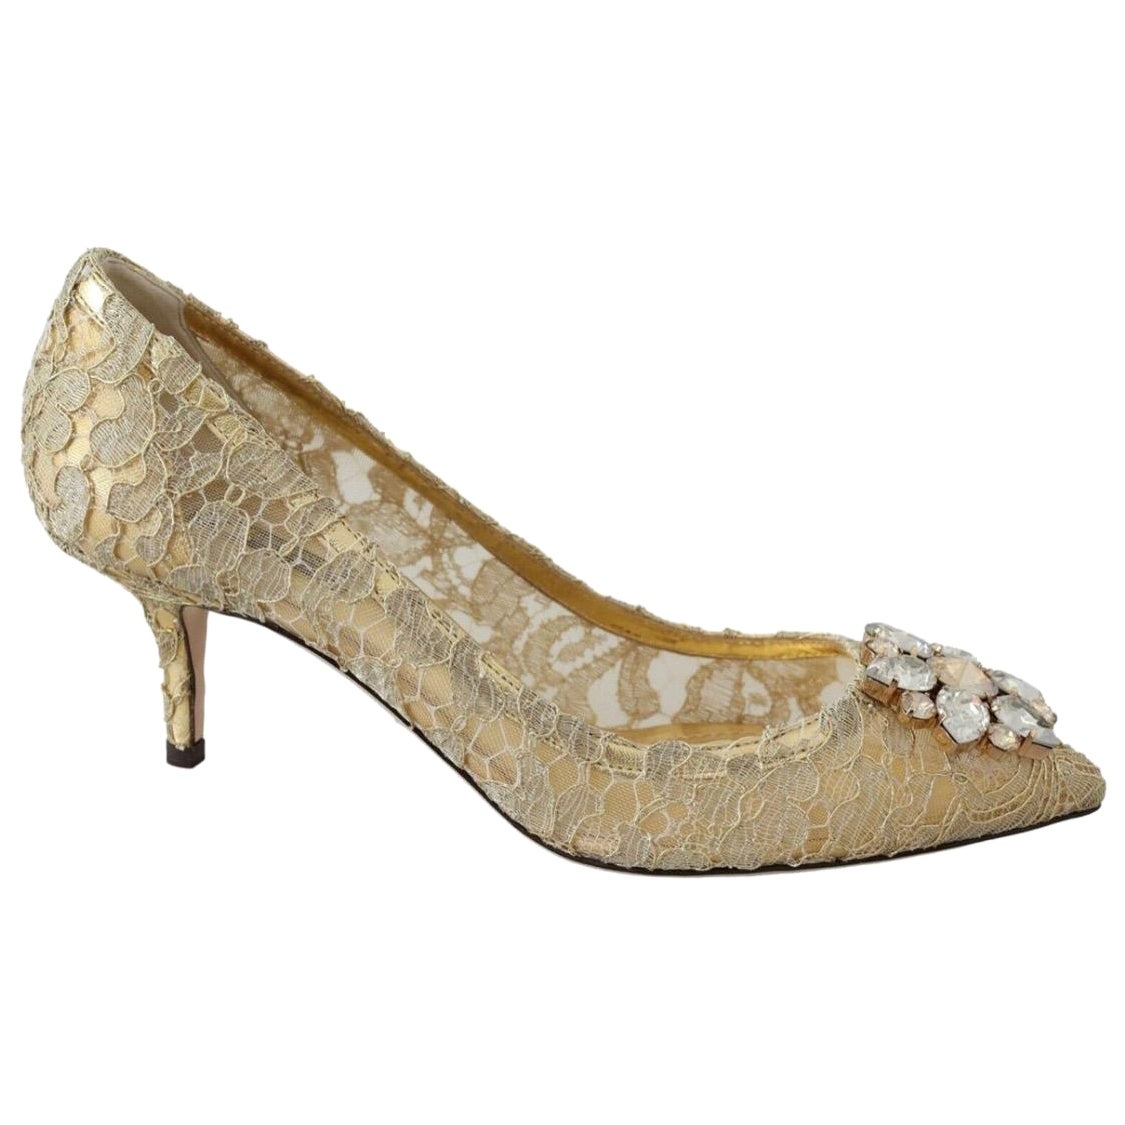 Dolce & Gabbana gold lace cloth shoes heels pumps 